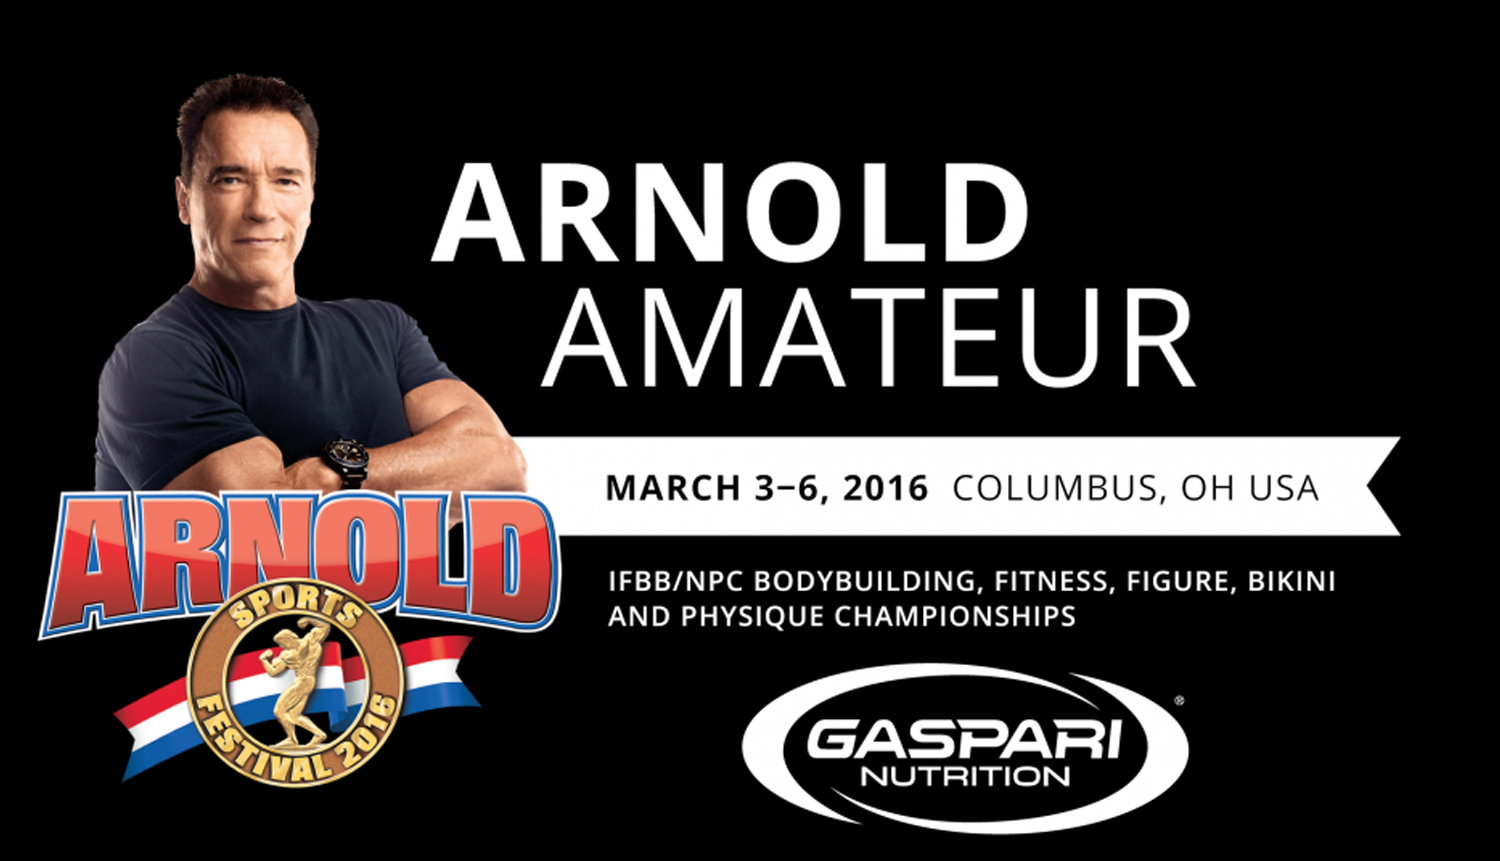 Programa de competencias Arnold Amateur ohio 2016